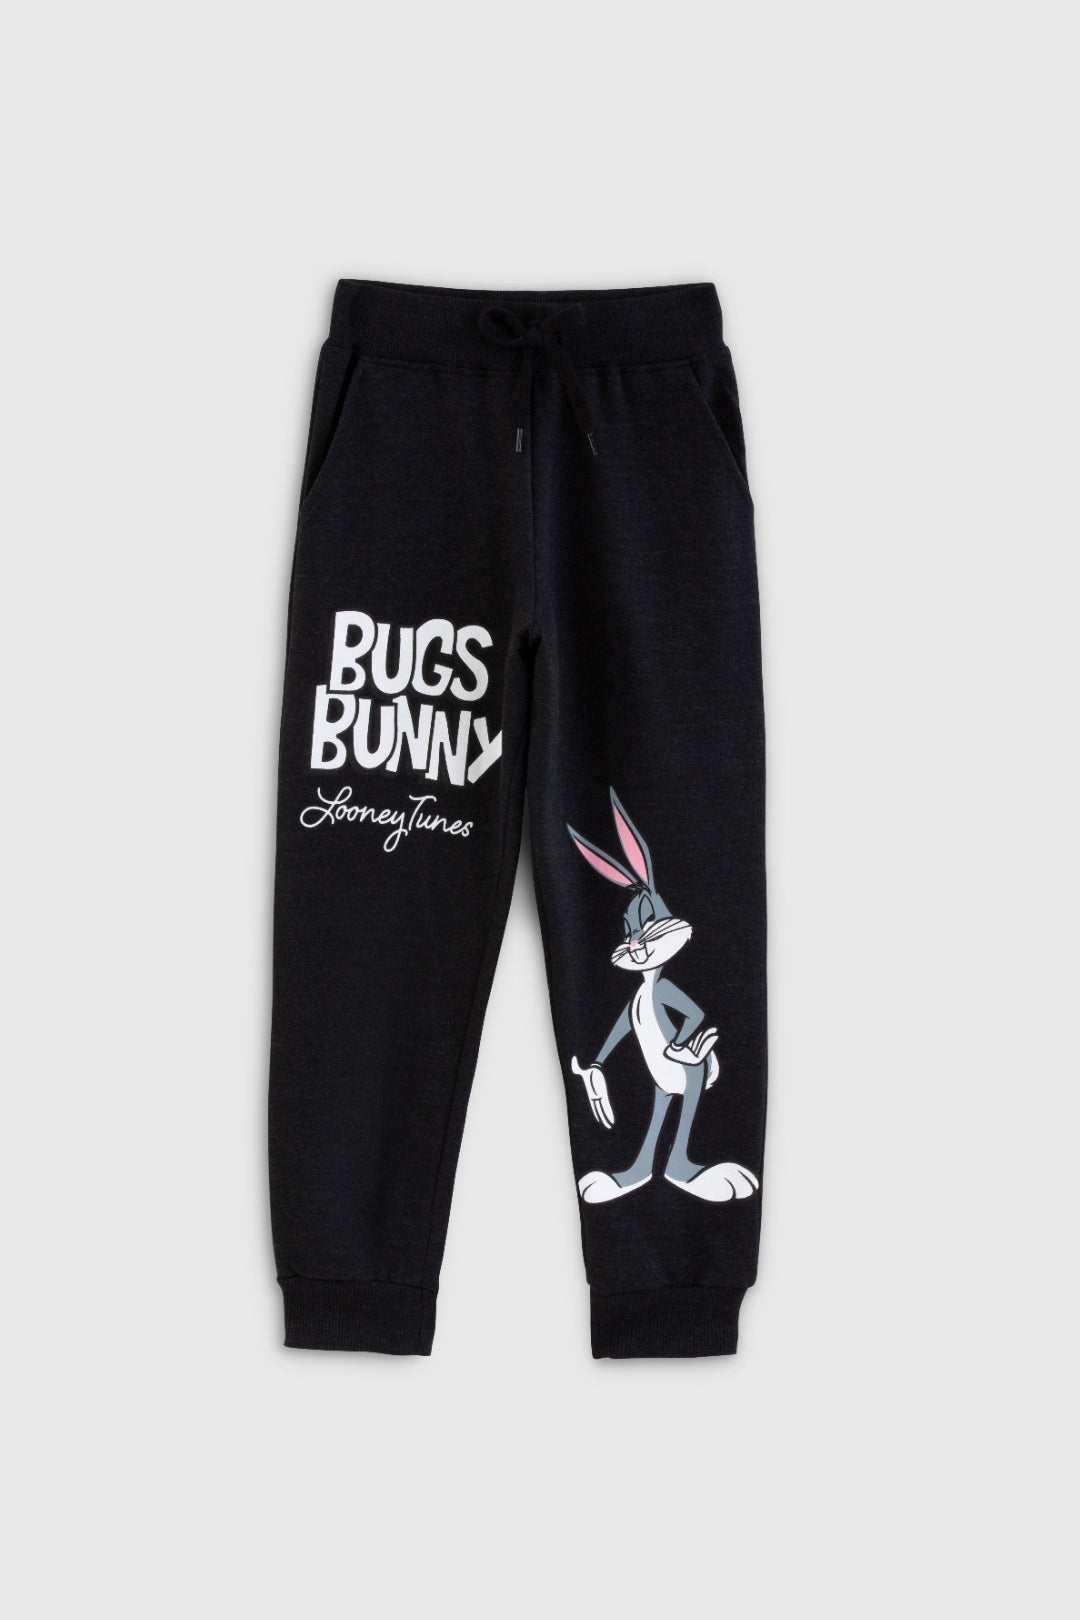 Bugs Bunny Classic Black Joggers